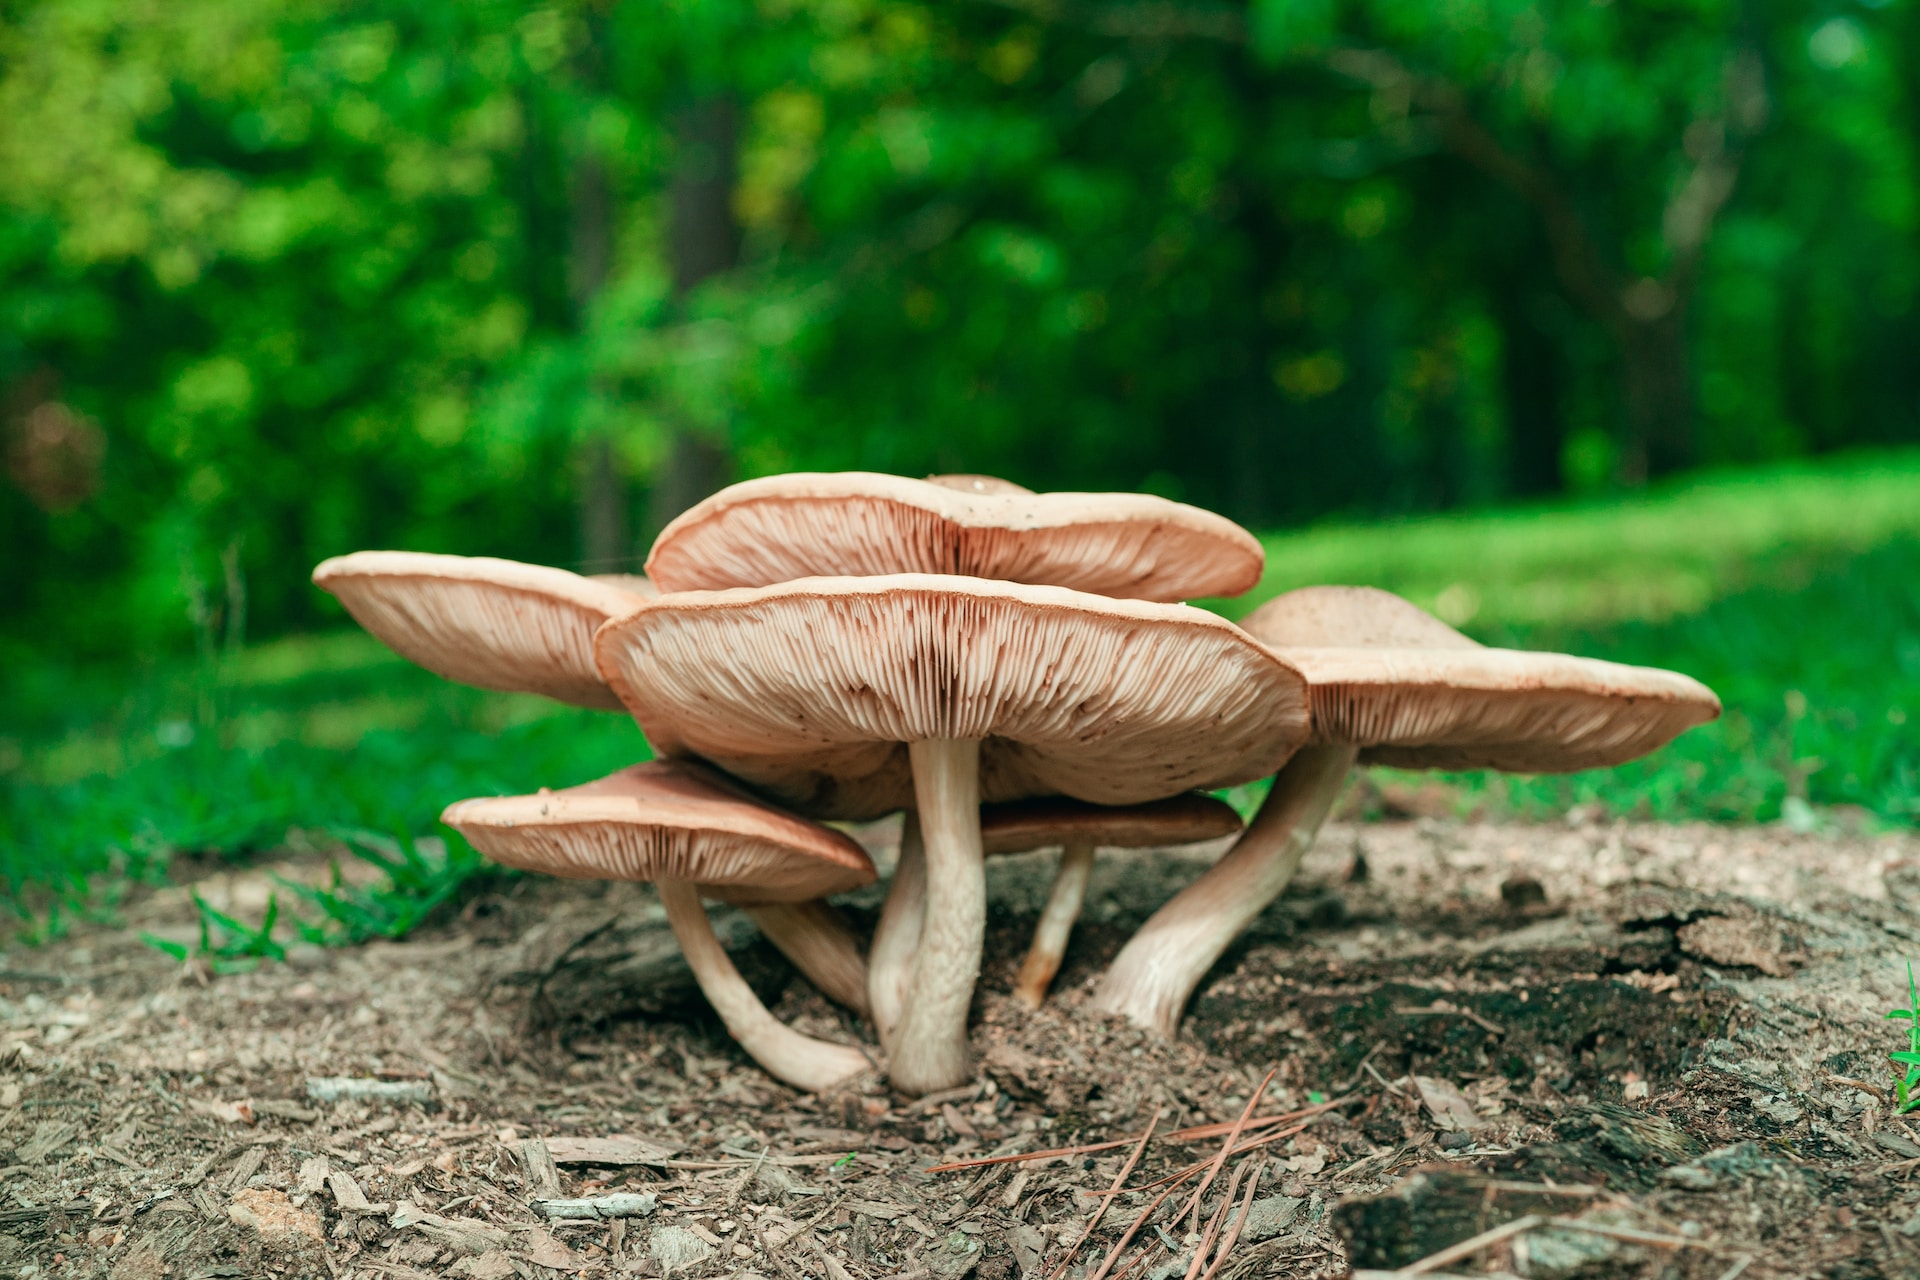 Mushroom Puns